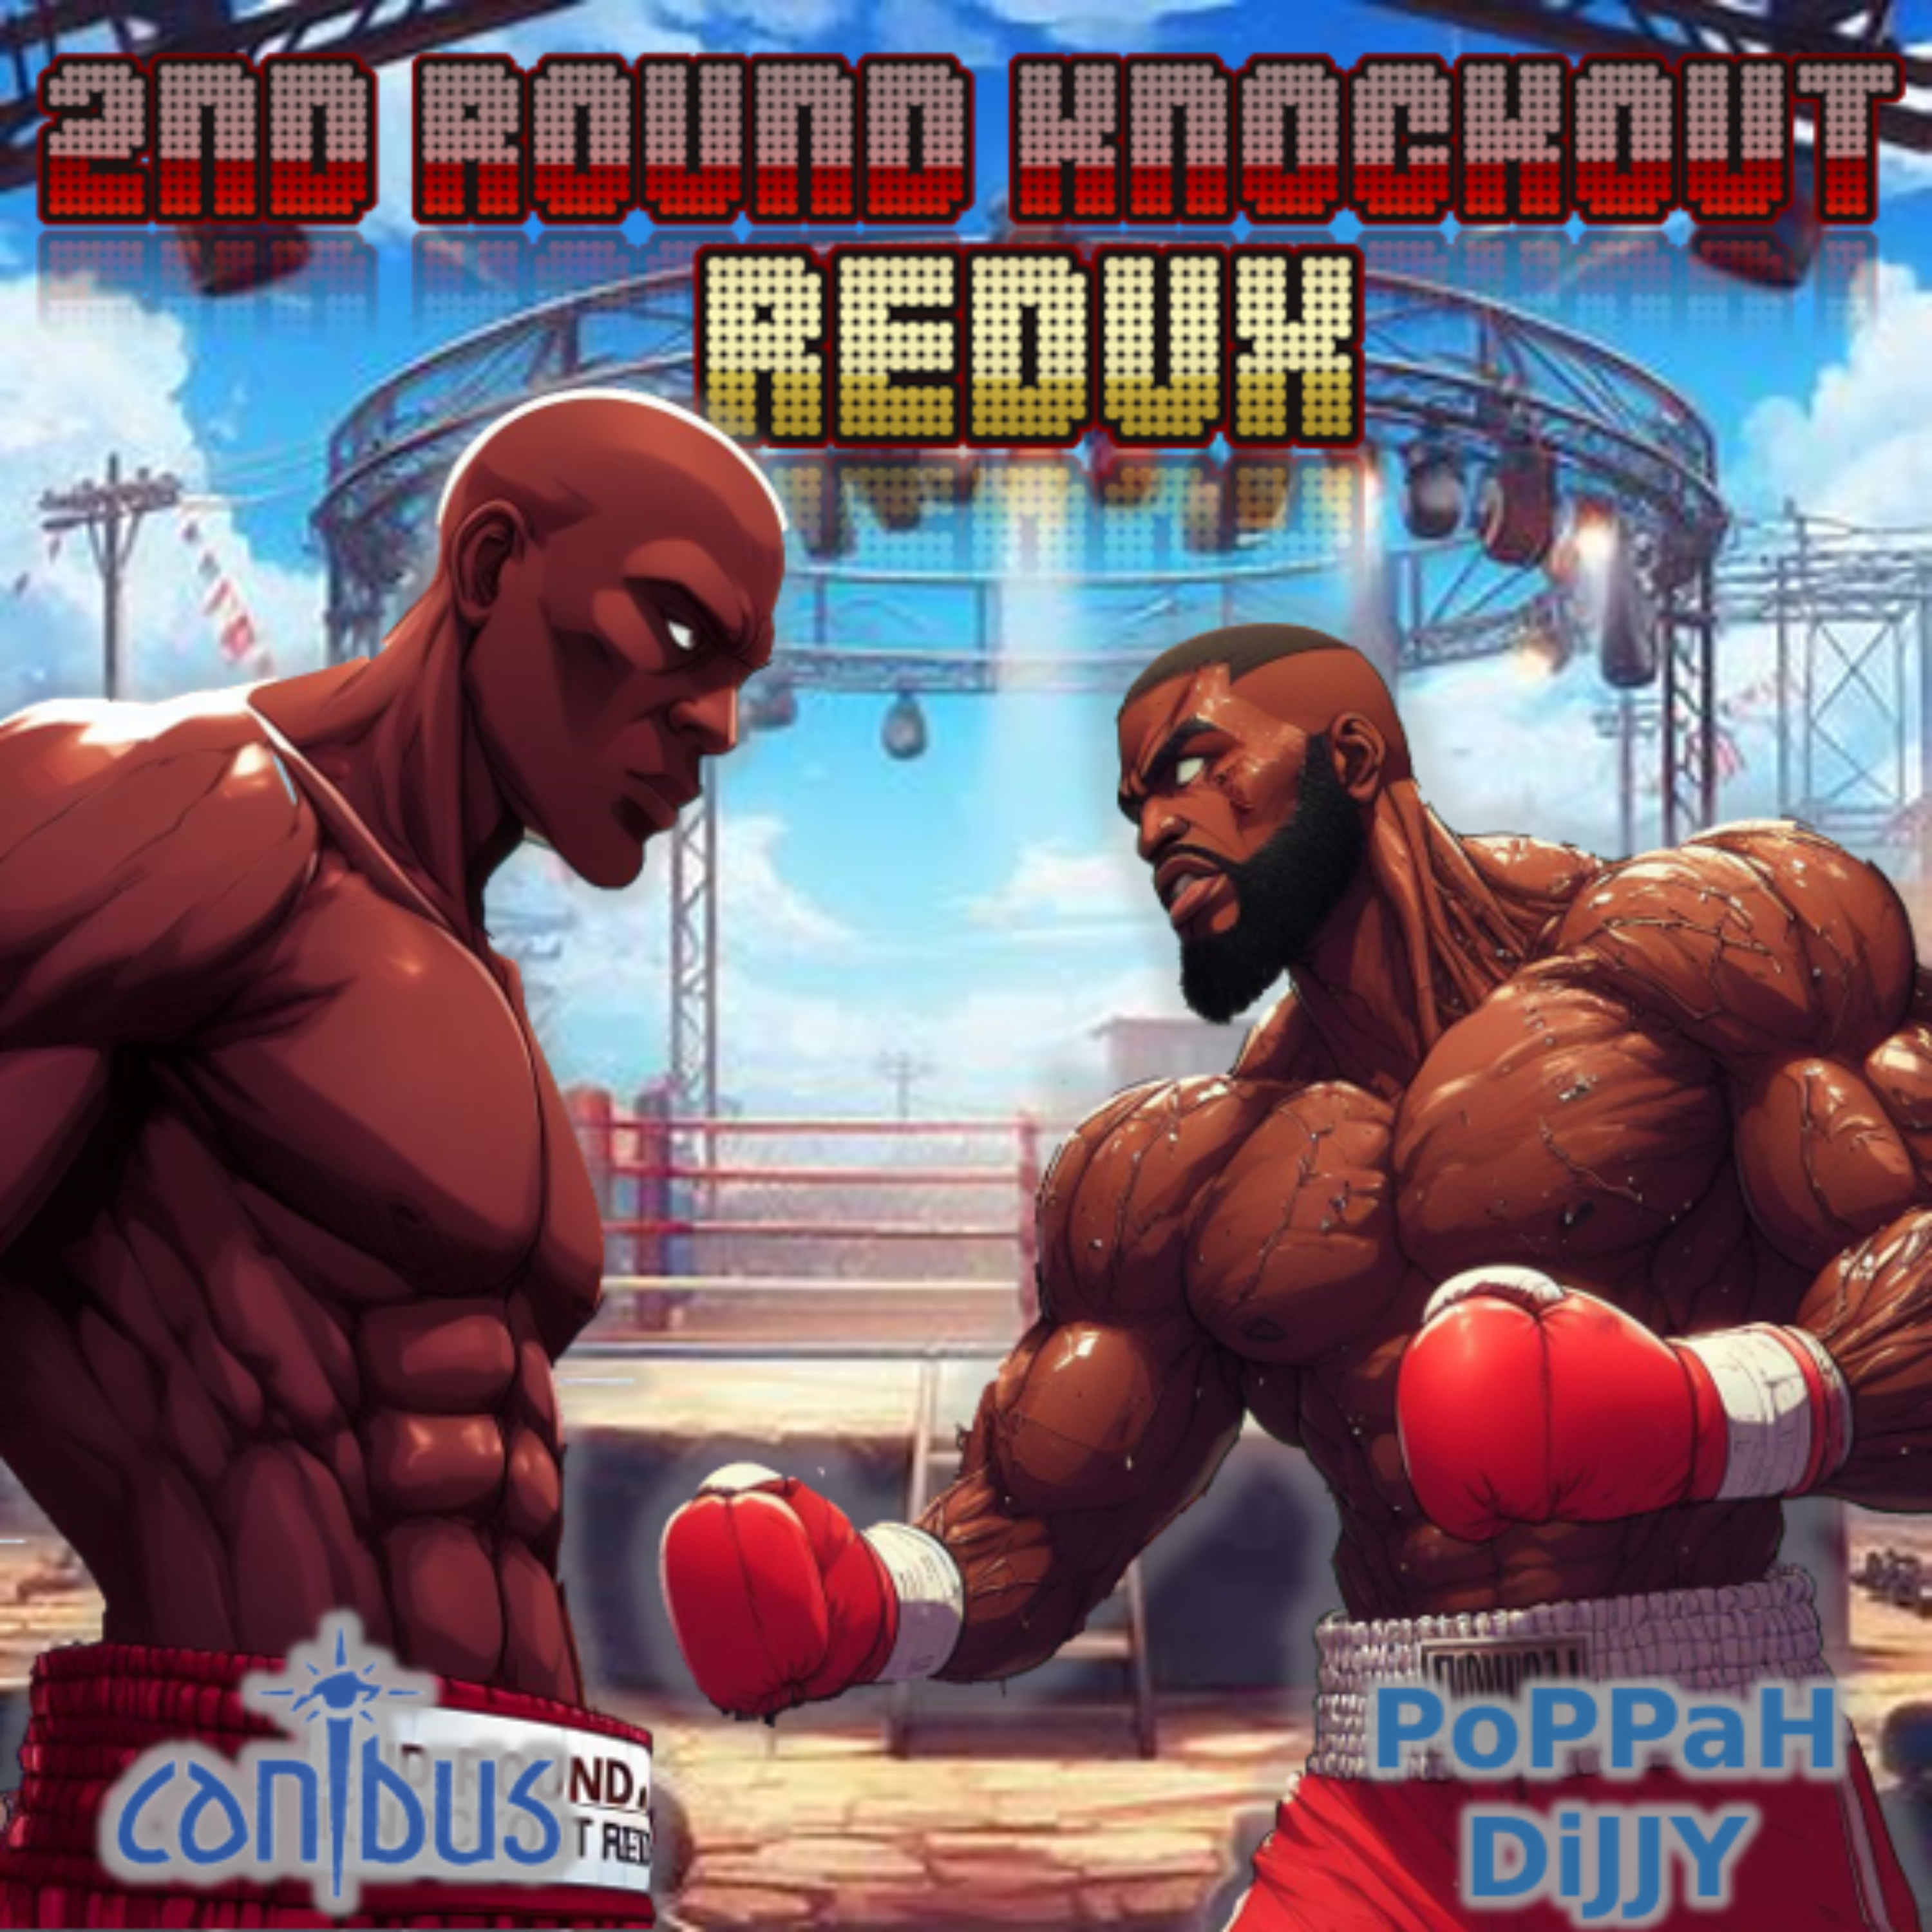 002 - Canibus, PoPPaH DiJJY - 2nd Round Knockout Redux